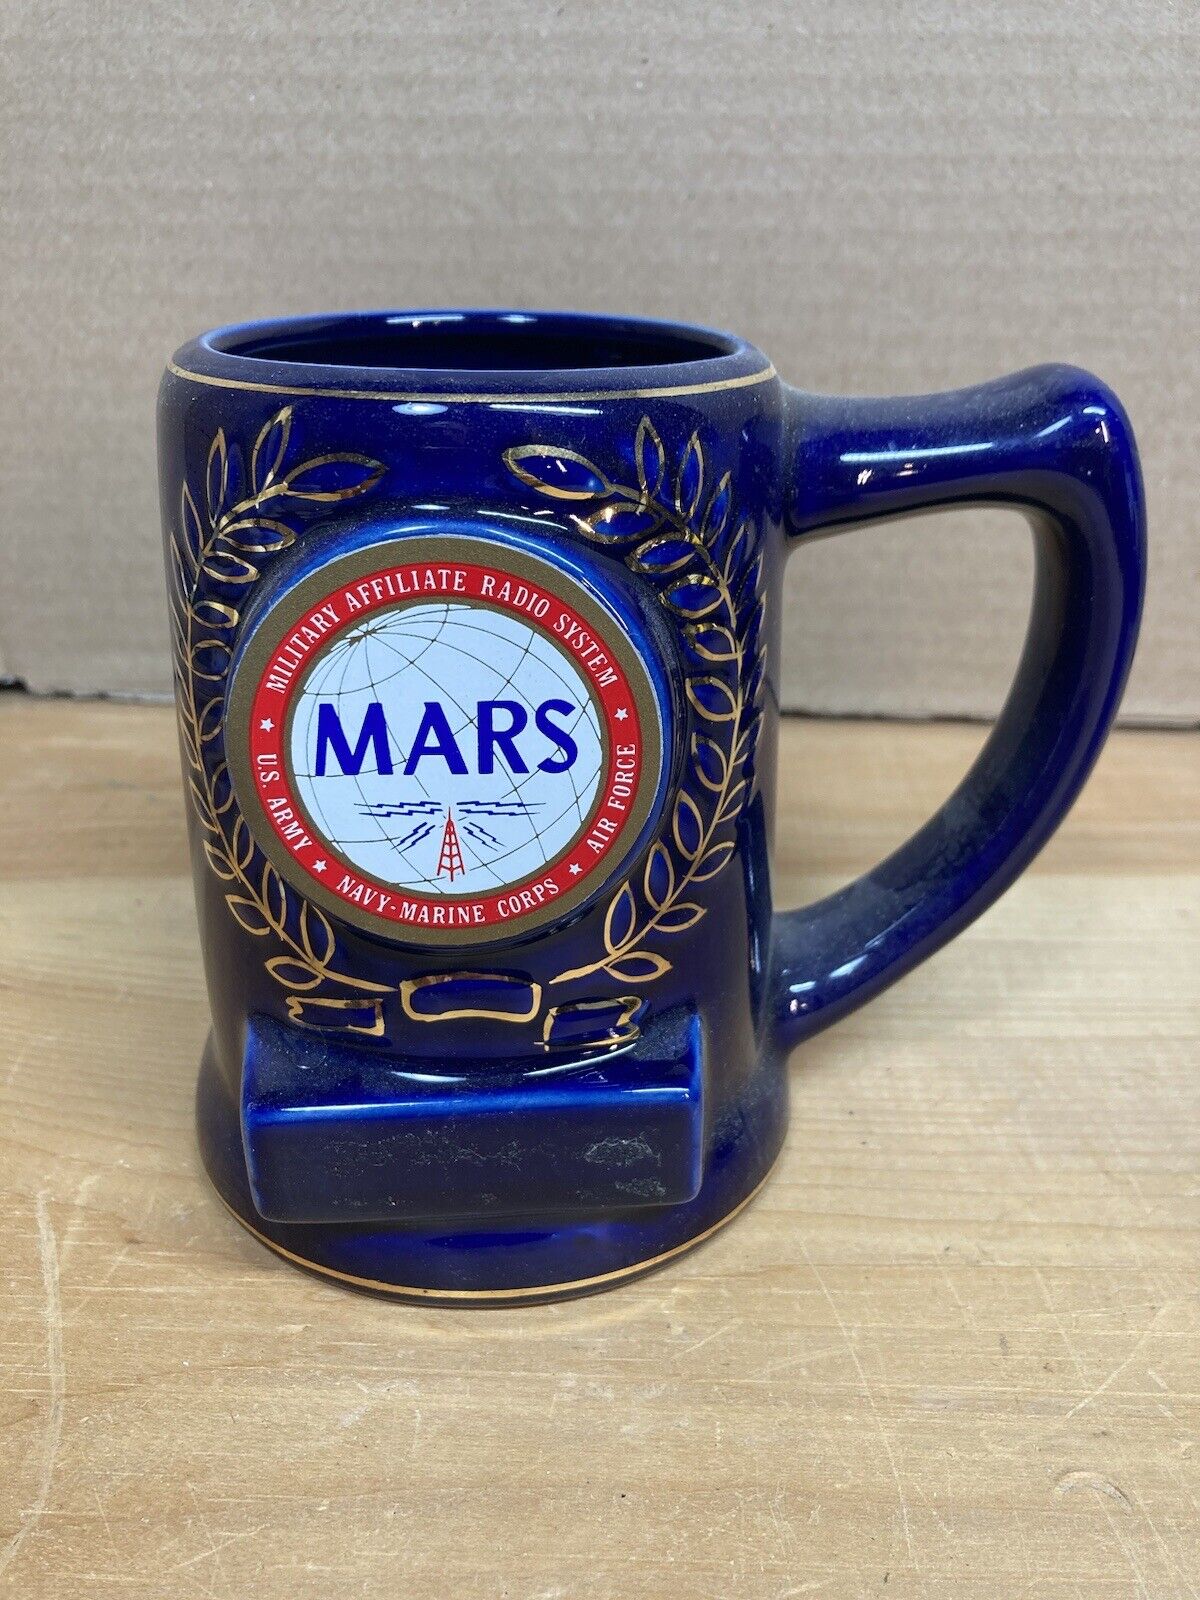 Mars Military Affiliate Radio System Coffee Drink Mug Cup